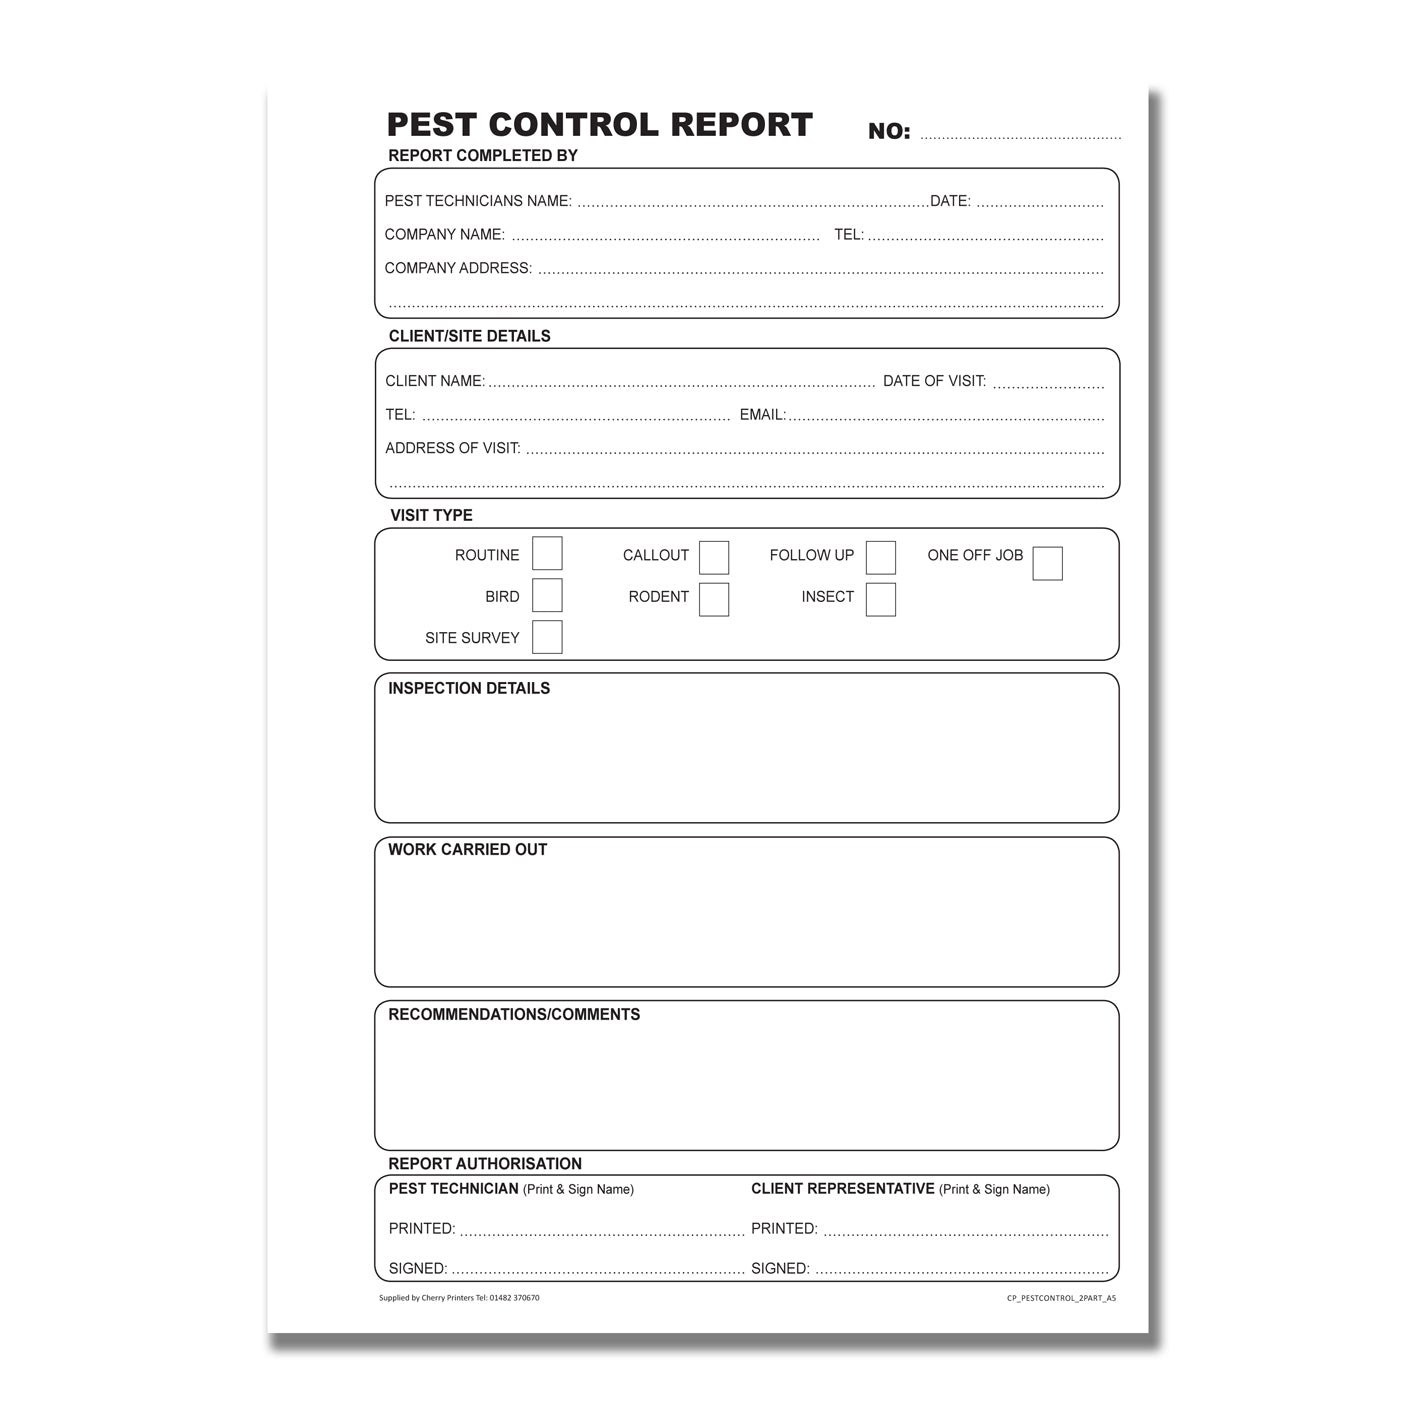 NCR Pest Control Report Duplicate Book A5